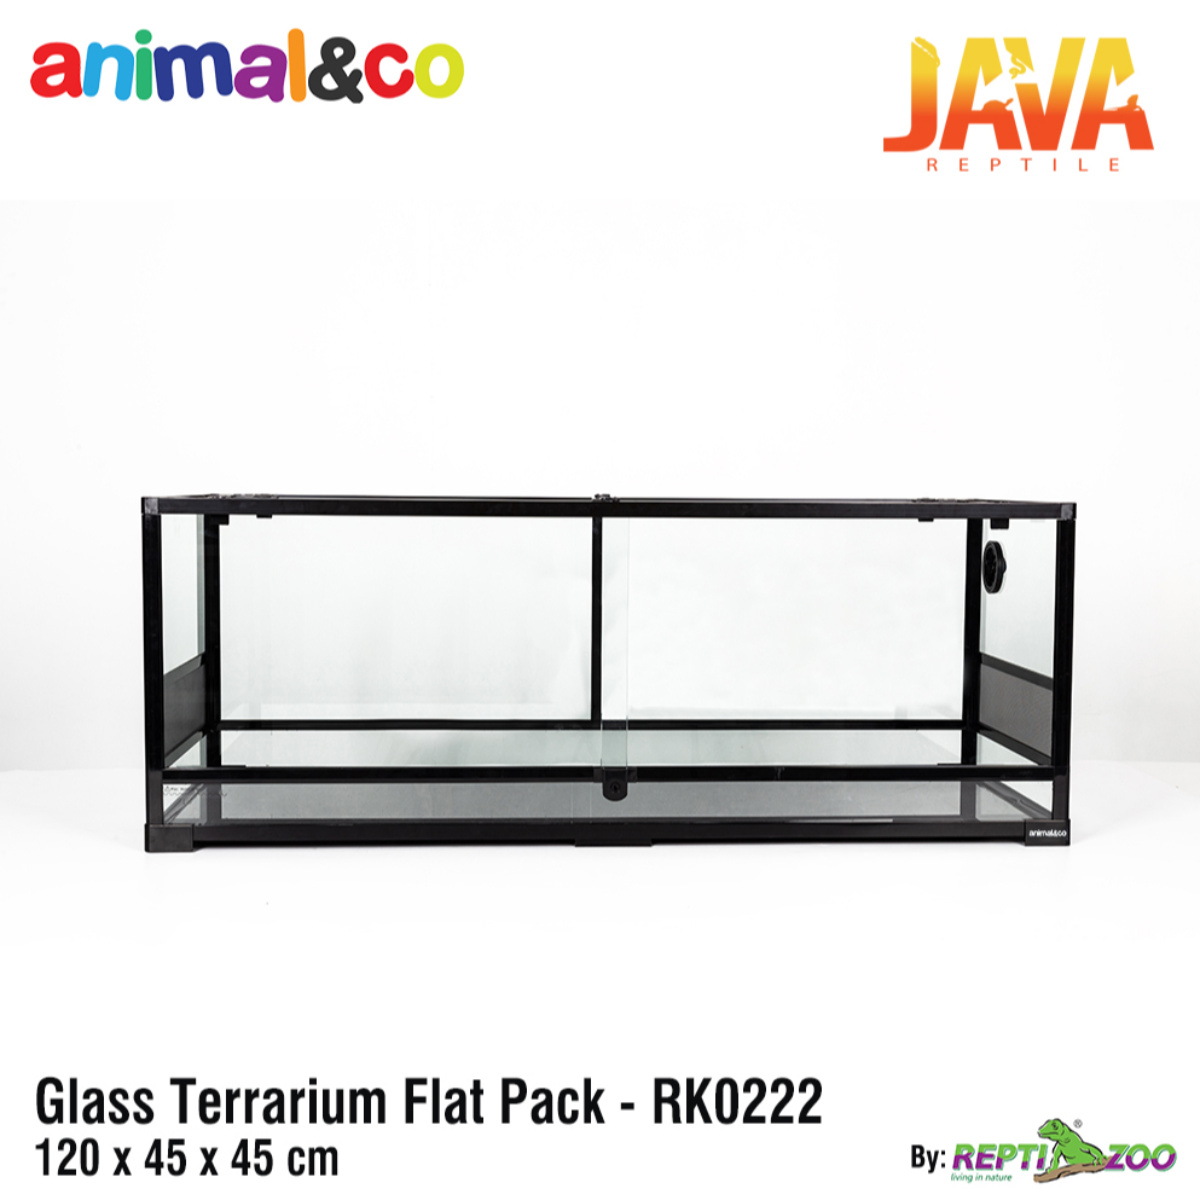 Animal&co Glass Terrarium 120x45x45cm Sliding Door by Reptizoo RK0222